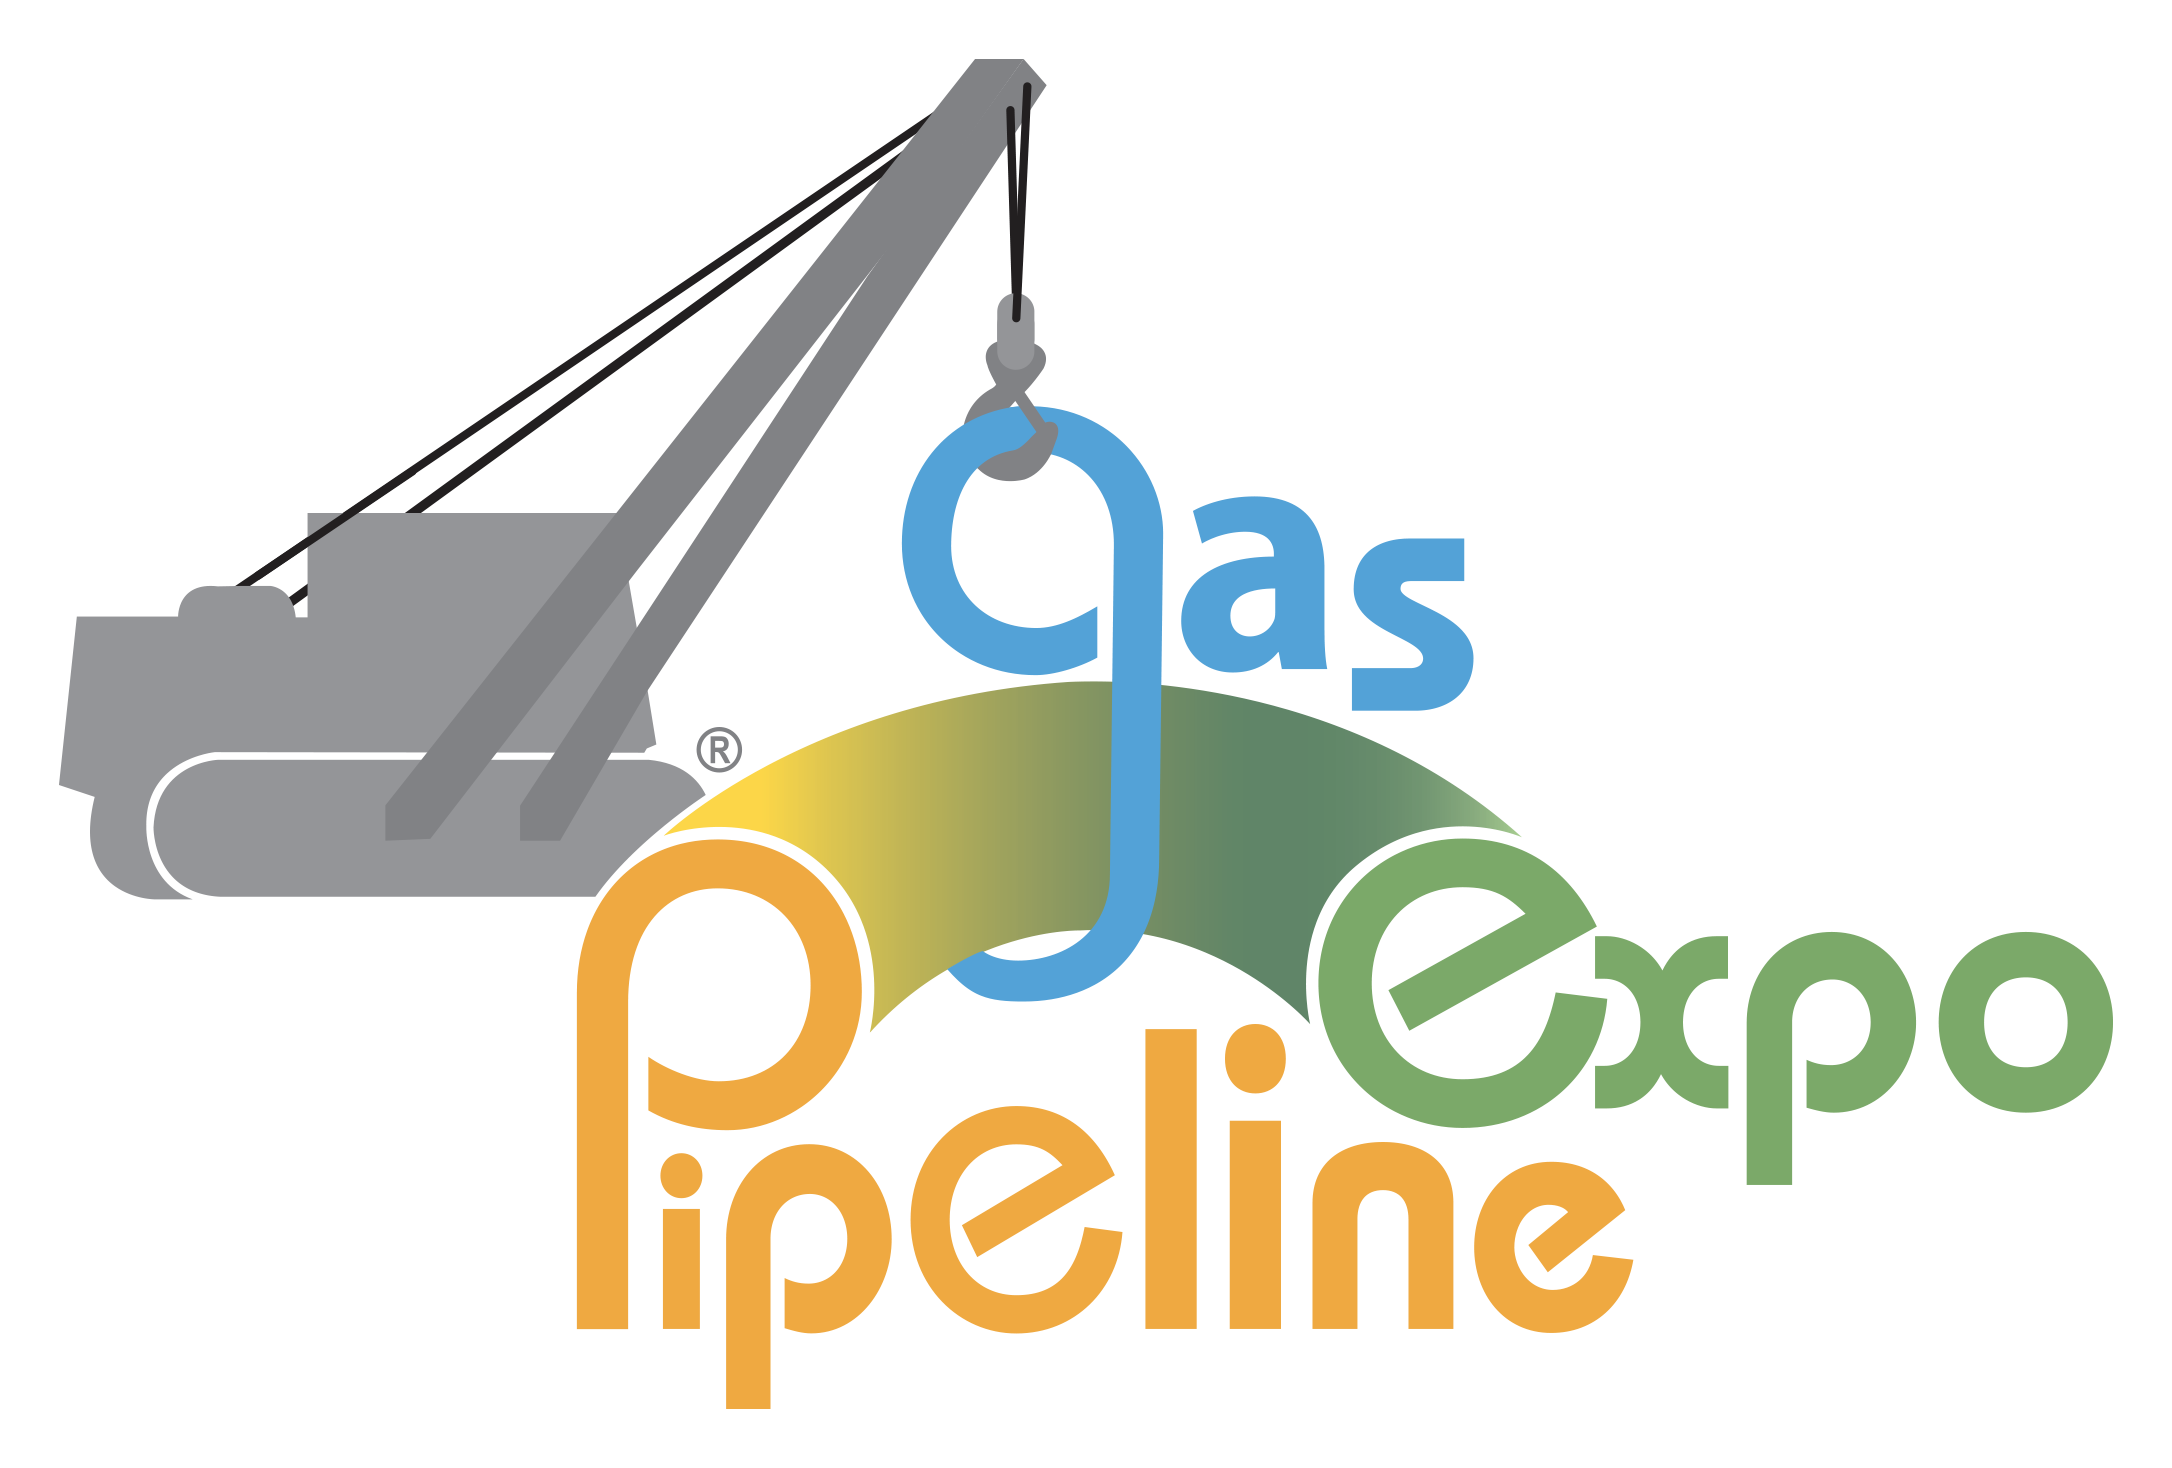 GAS EXPO PIPELINE